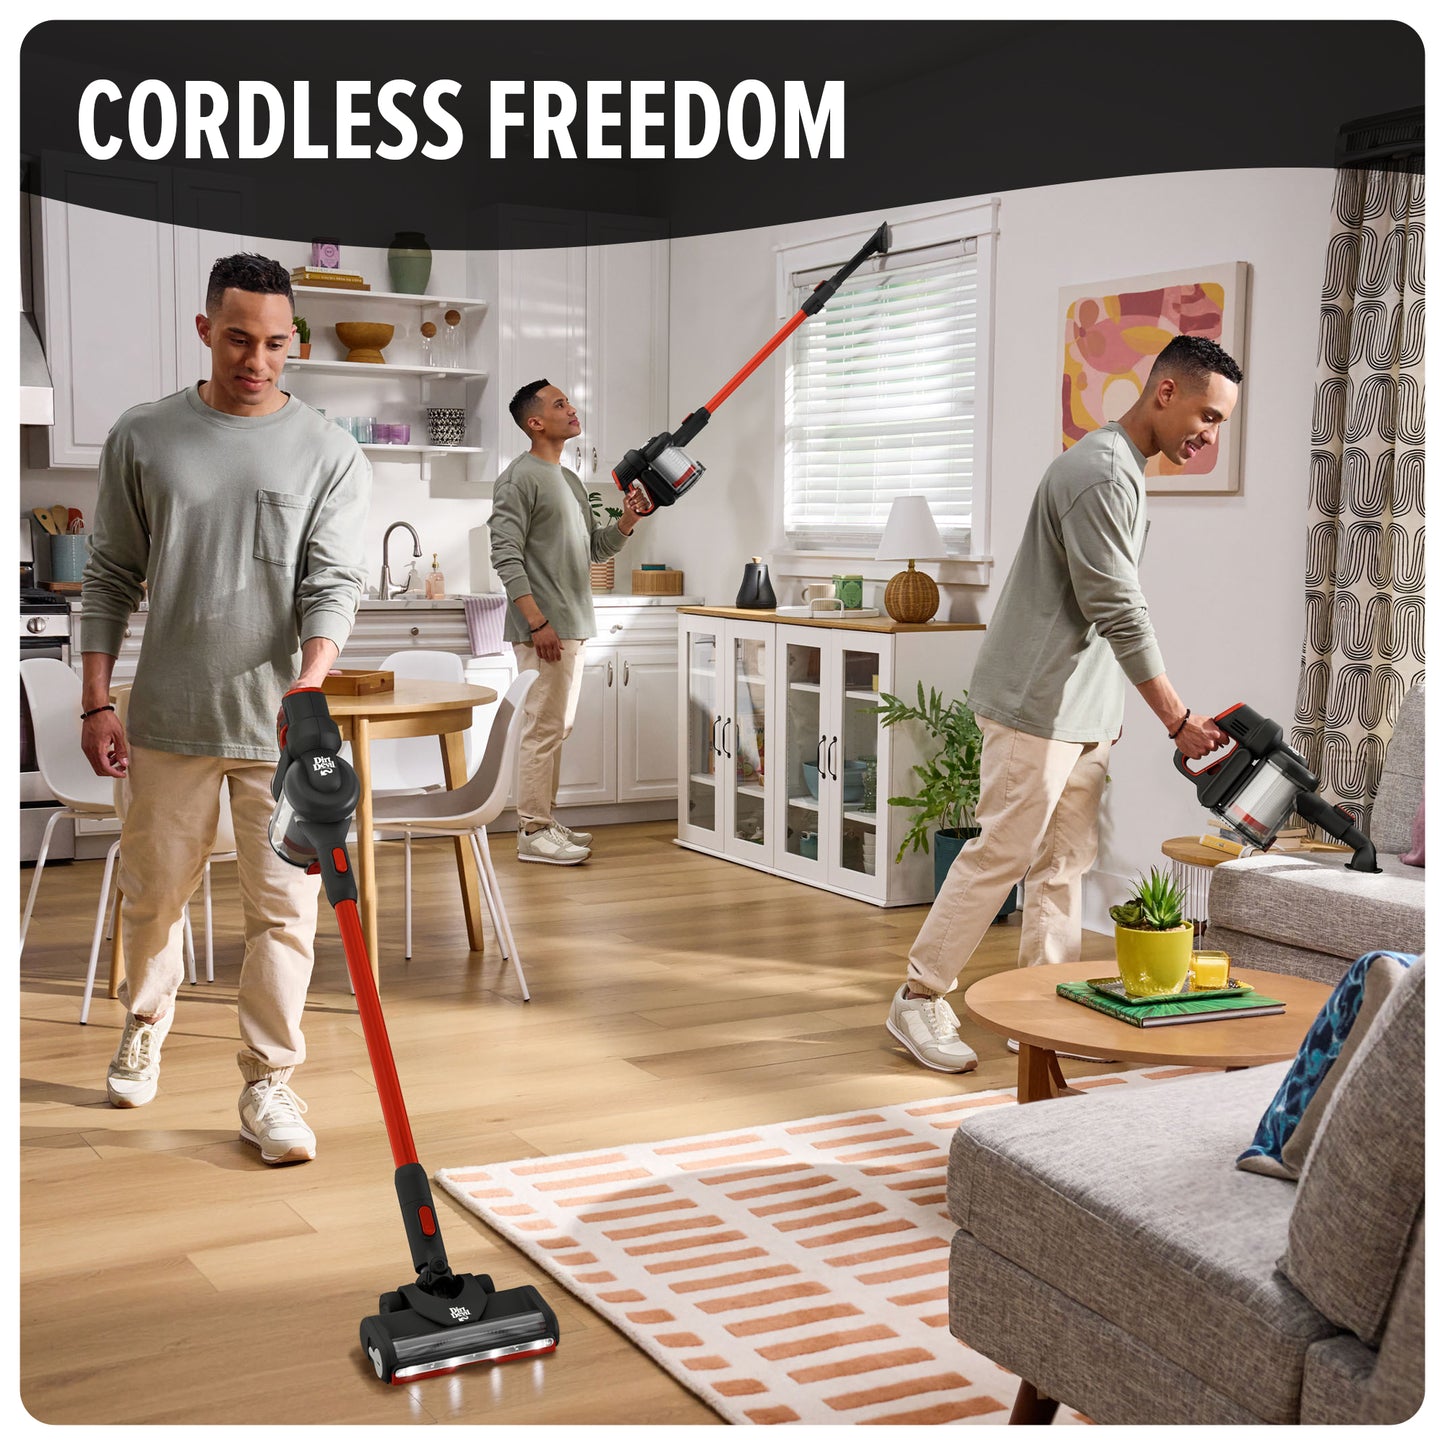 Cordless Standing Stick Vacuum